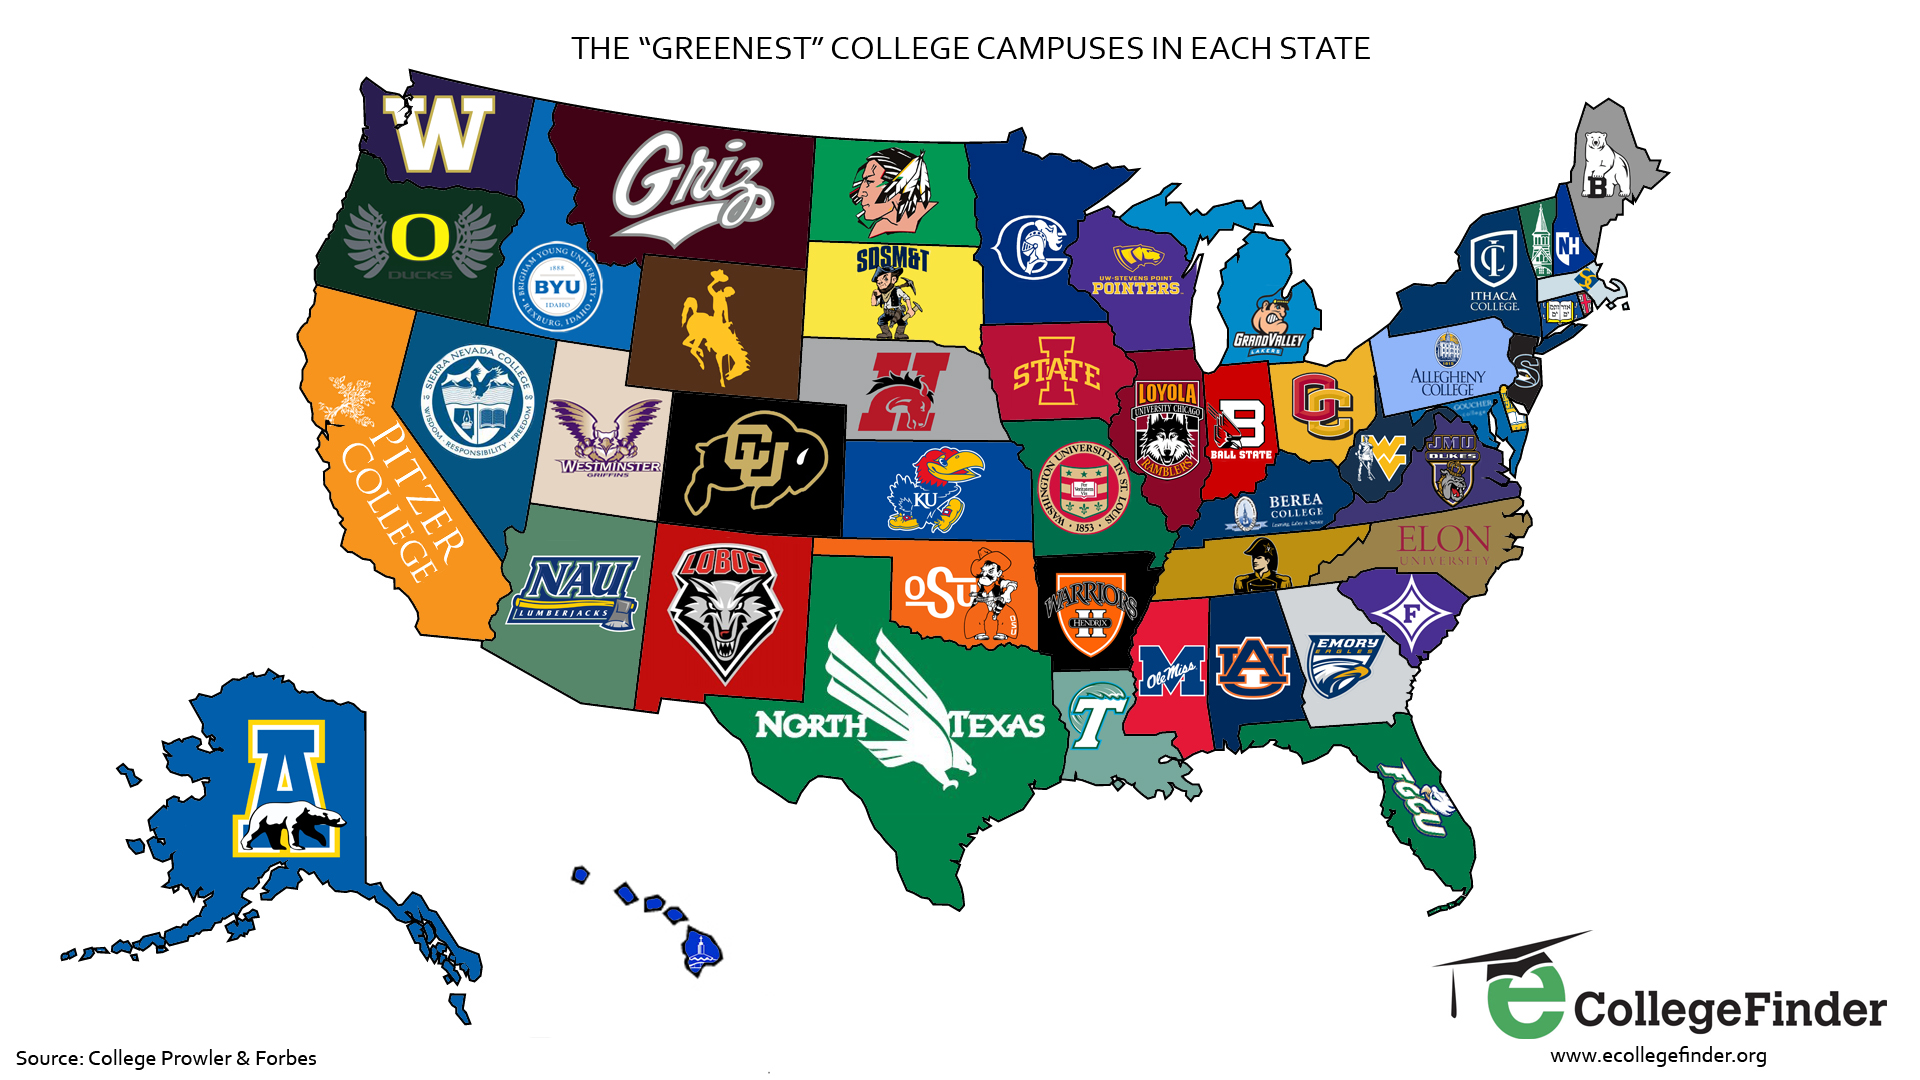 Iowa State University ranked “greenest” college in Iowa | Iowa ...